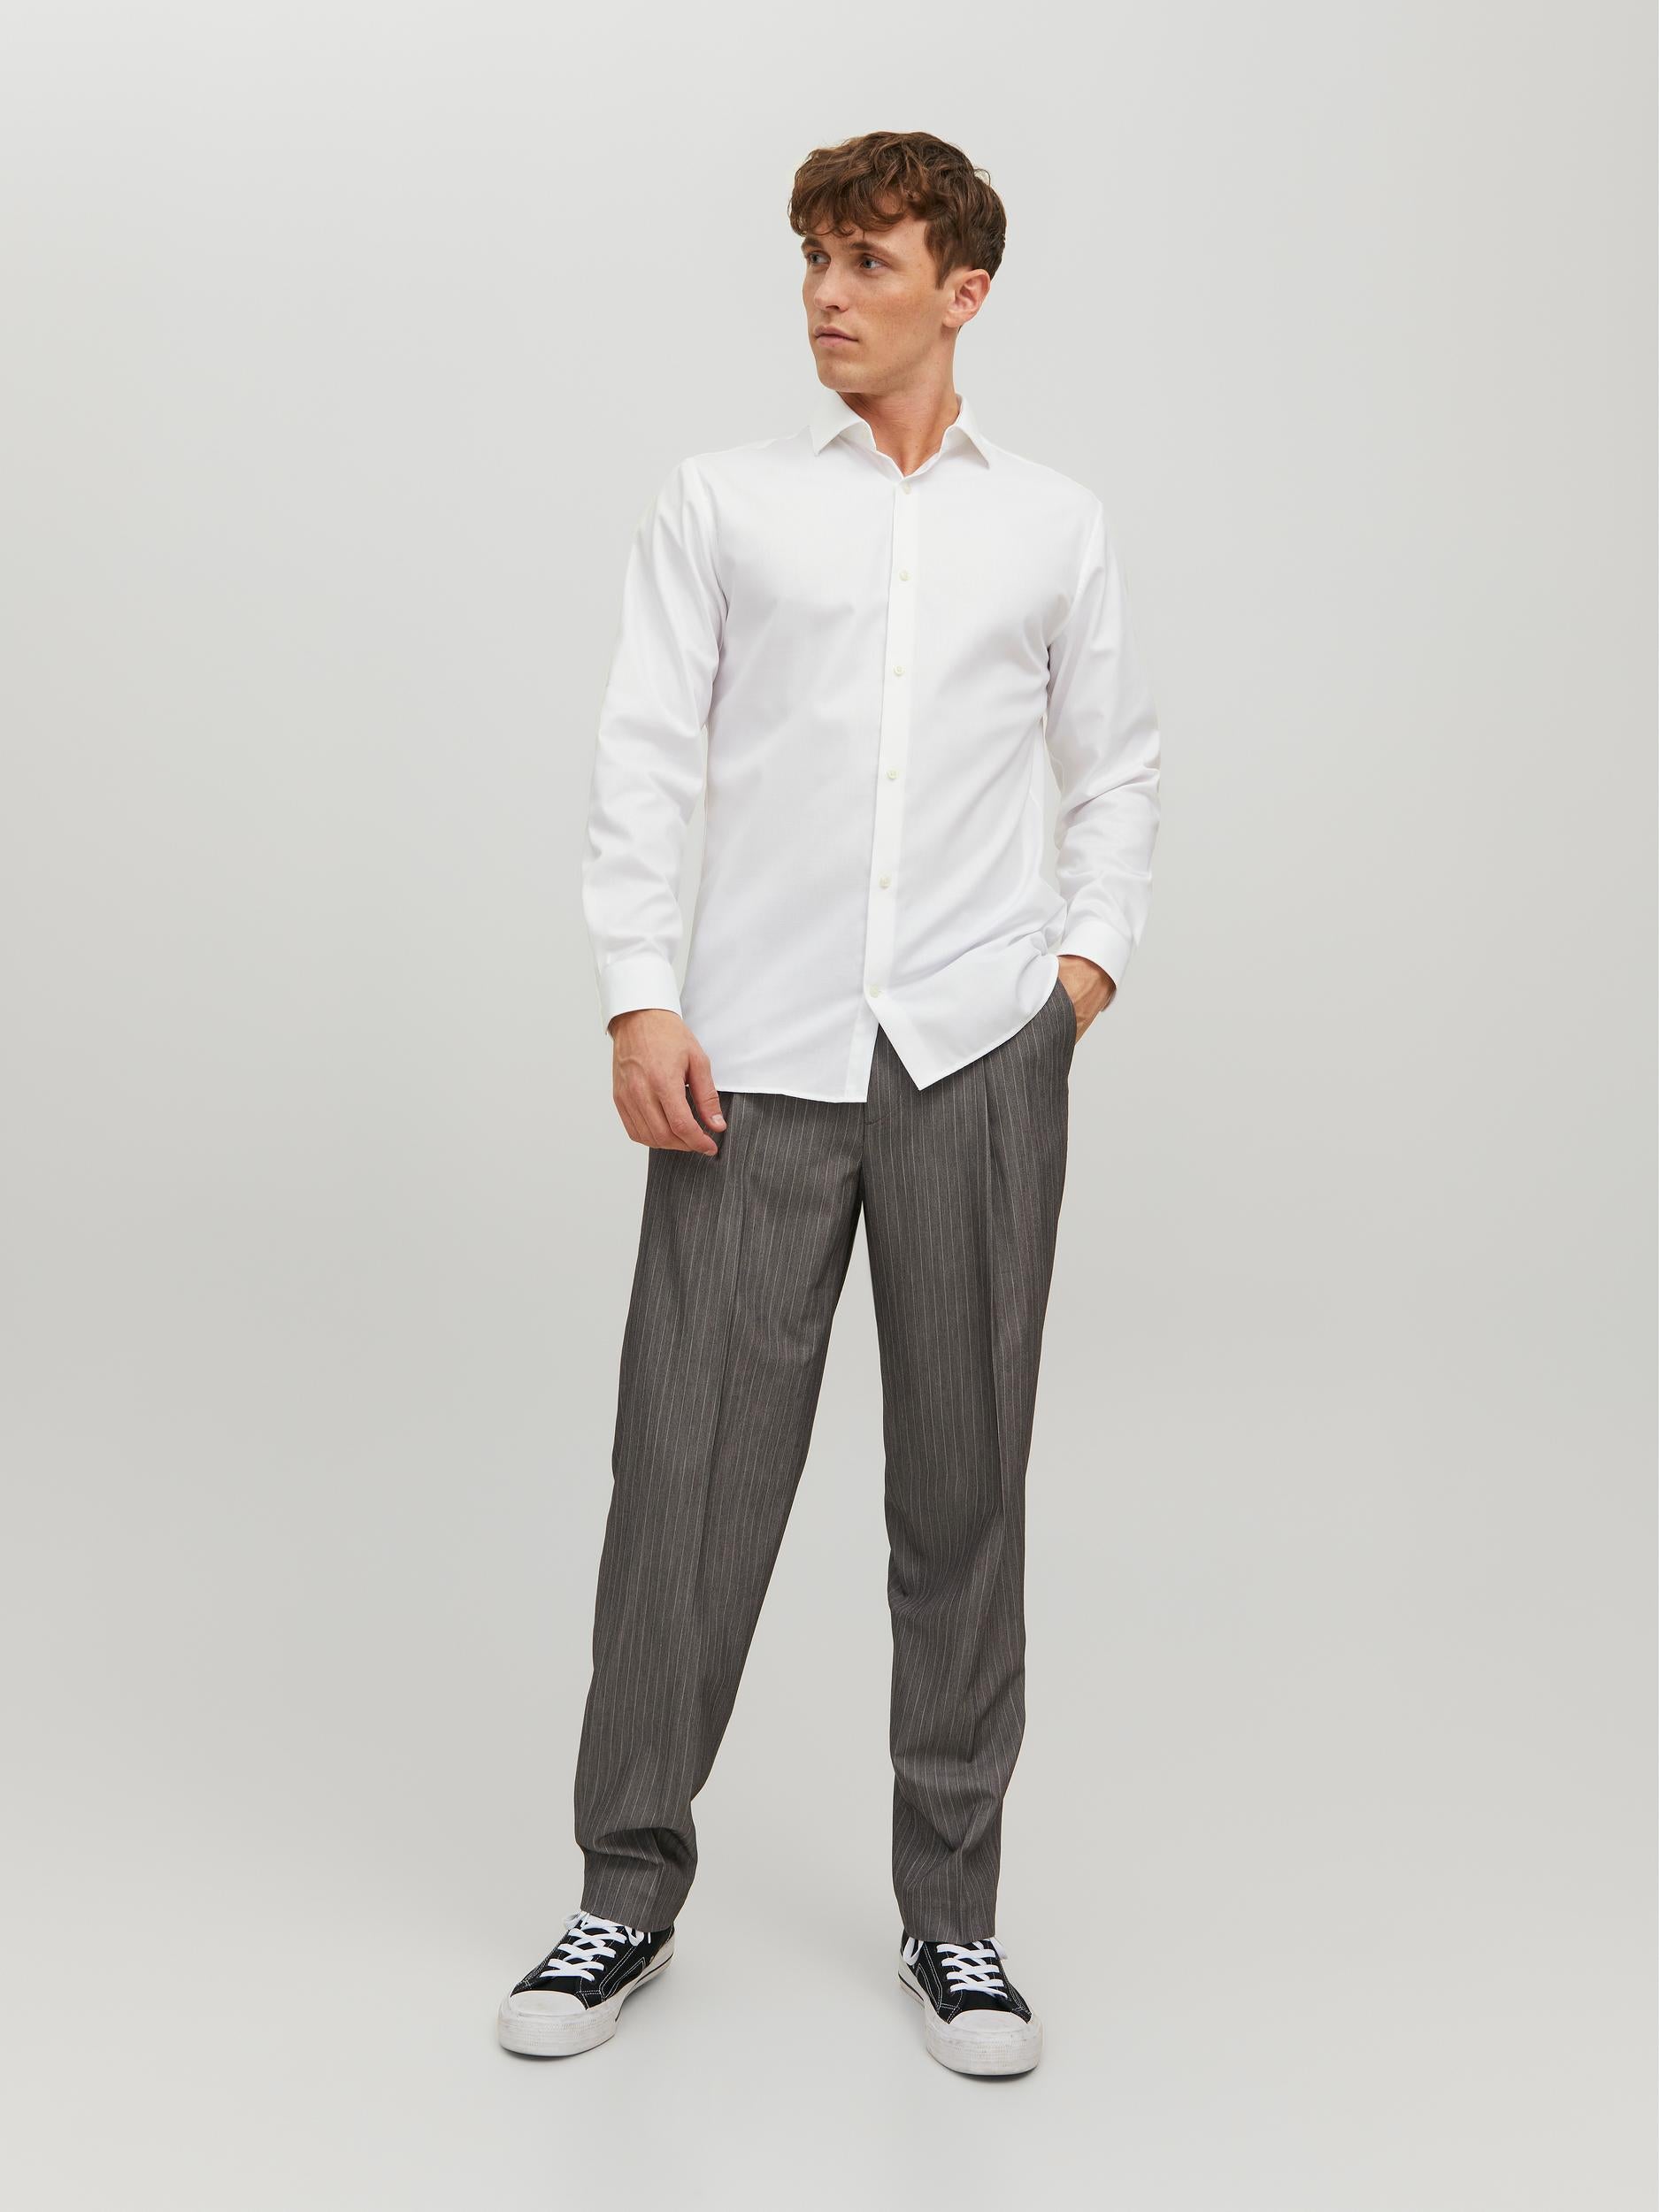 Men's Parker White Shirt-Model Front View